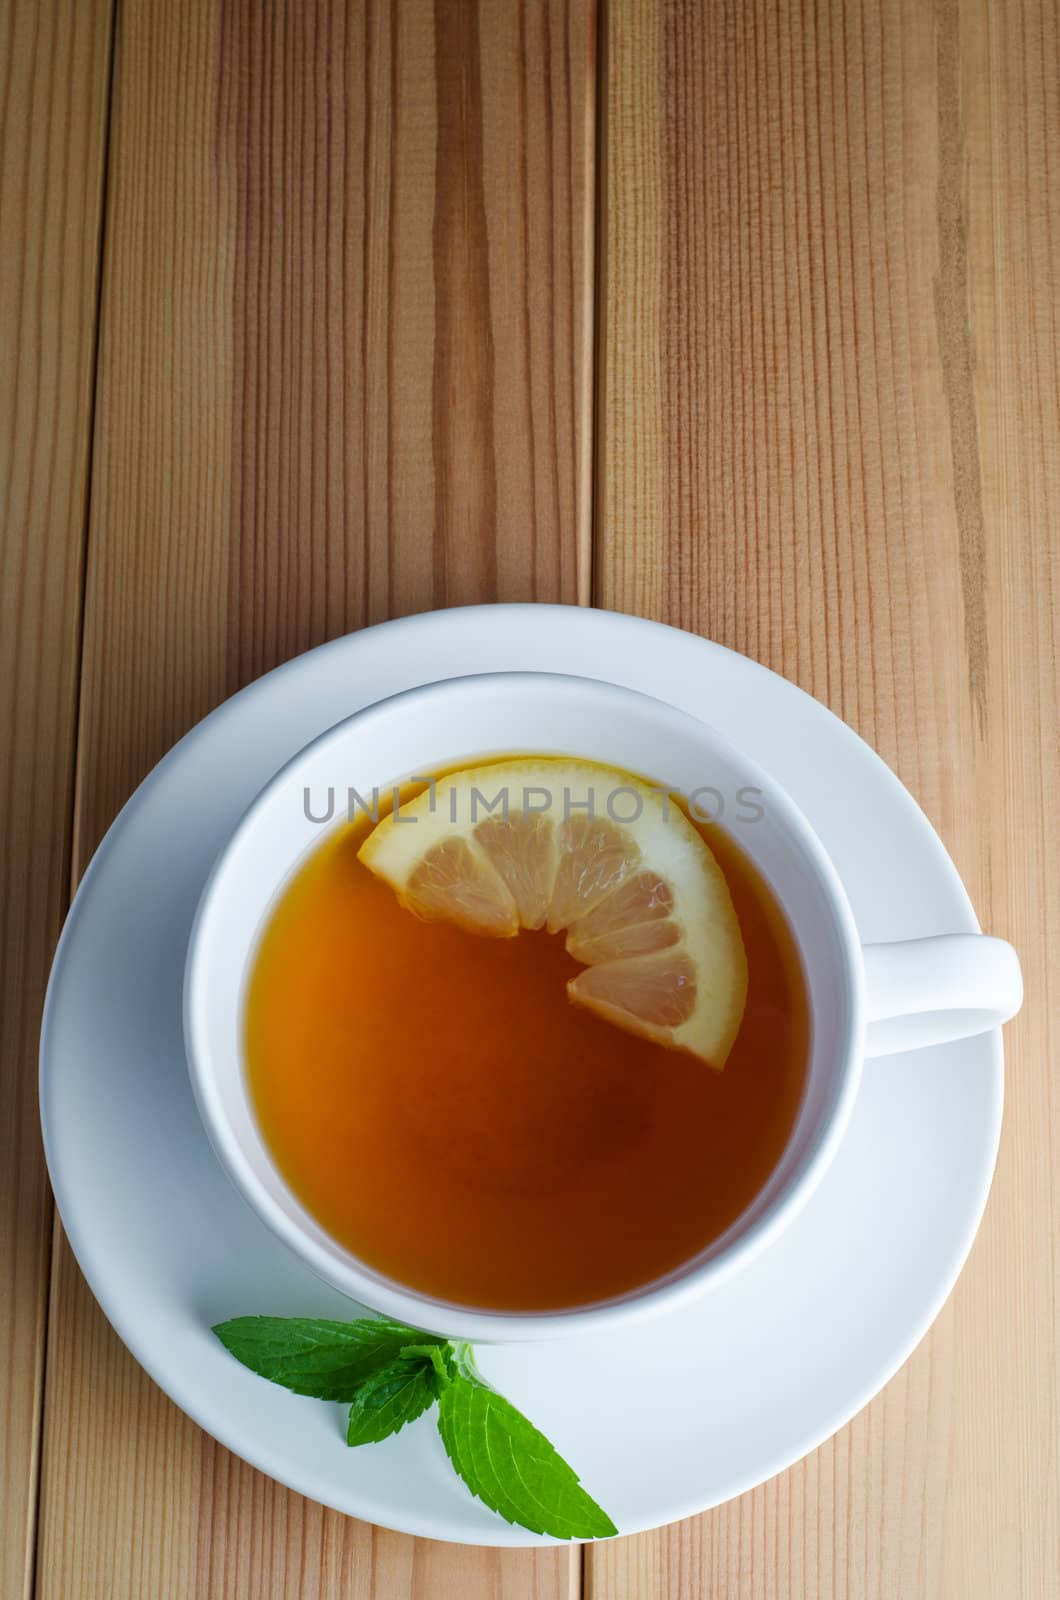 Lemon Tea with Mint Leaves by frannyanne